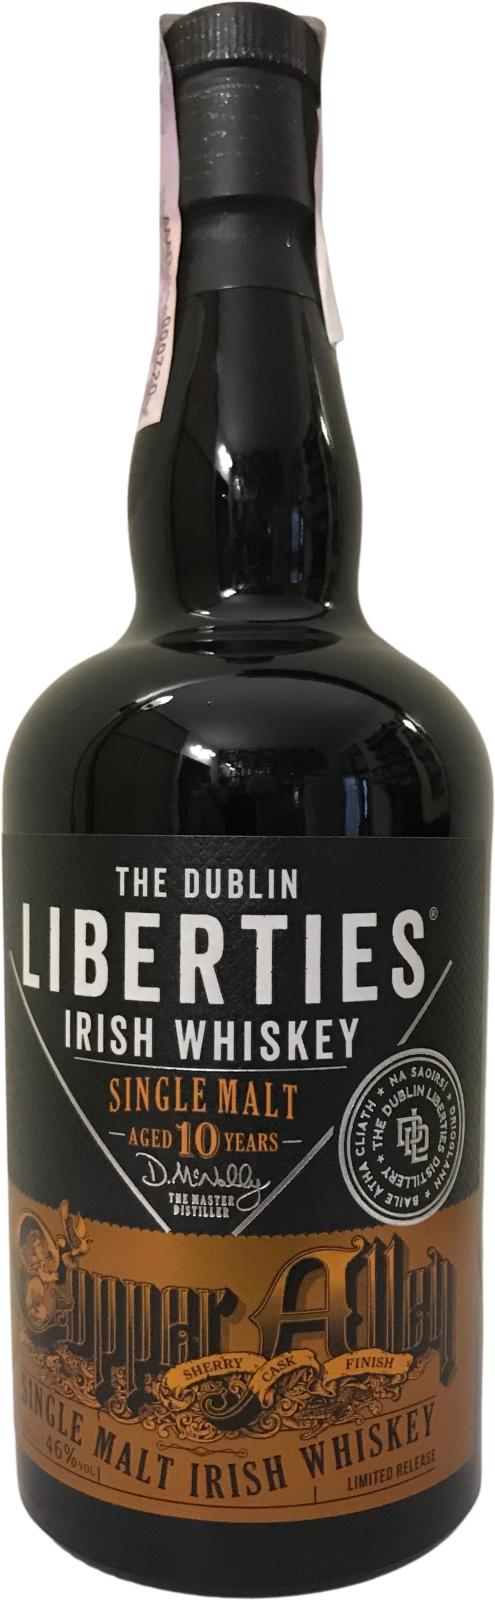 The Dublin Liberties Copper Alley Limited Release Bourbon + Oloroso Sherry Casks Finish 46% 700ml